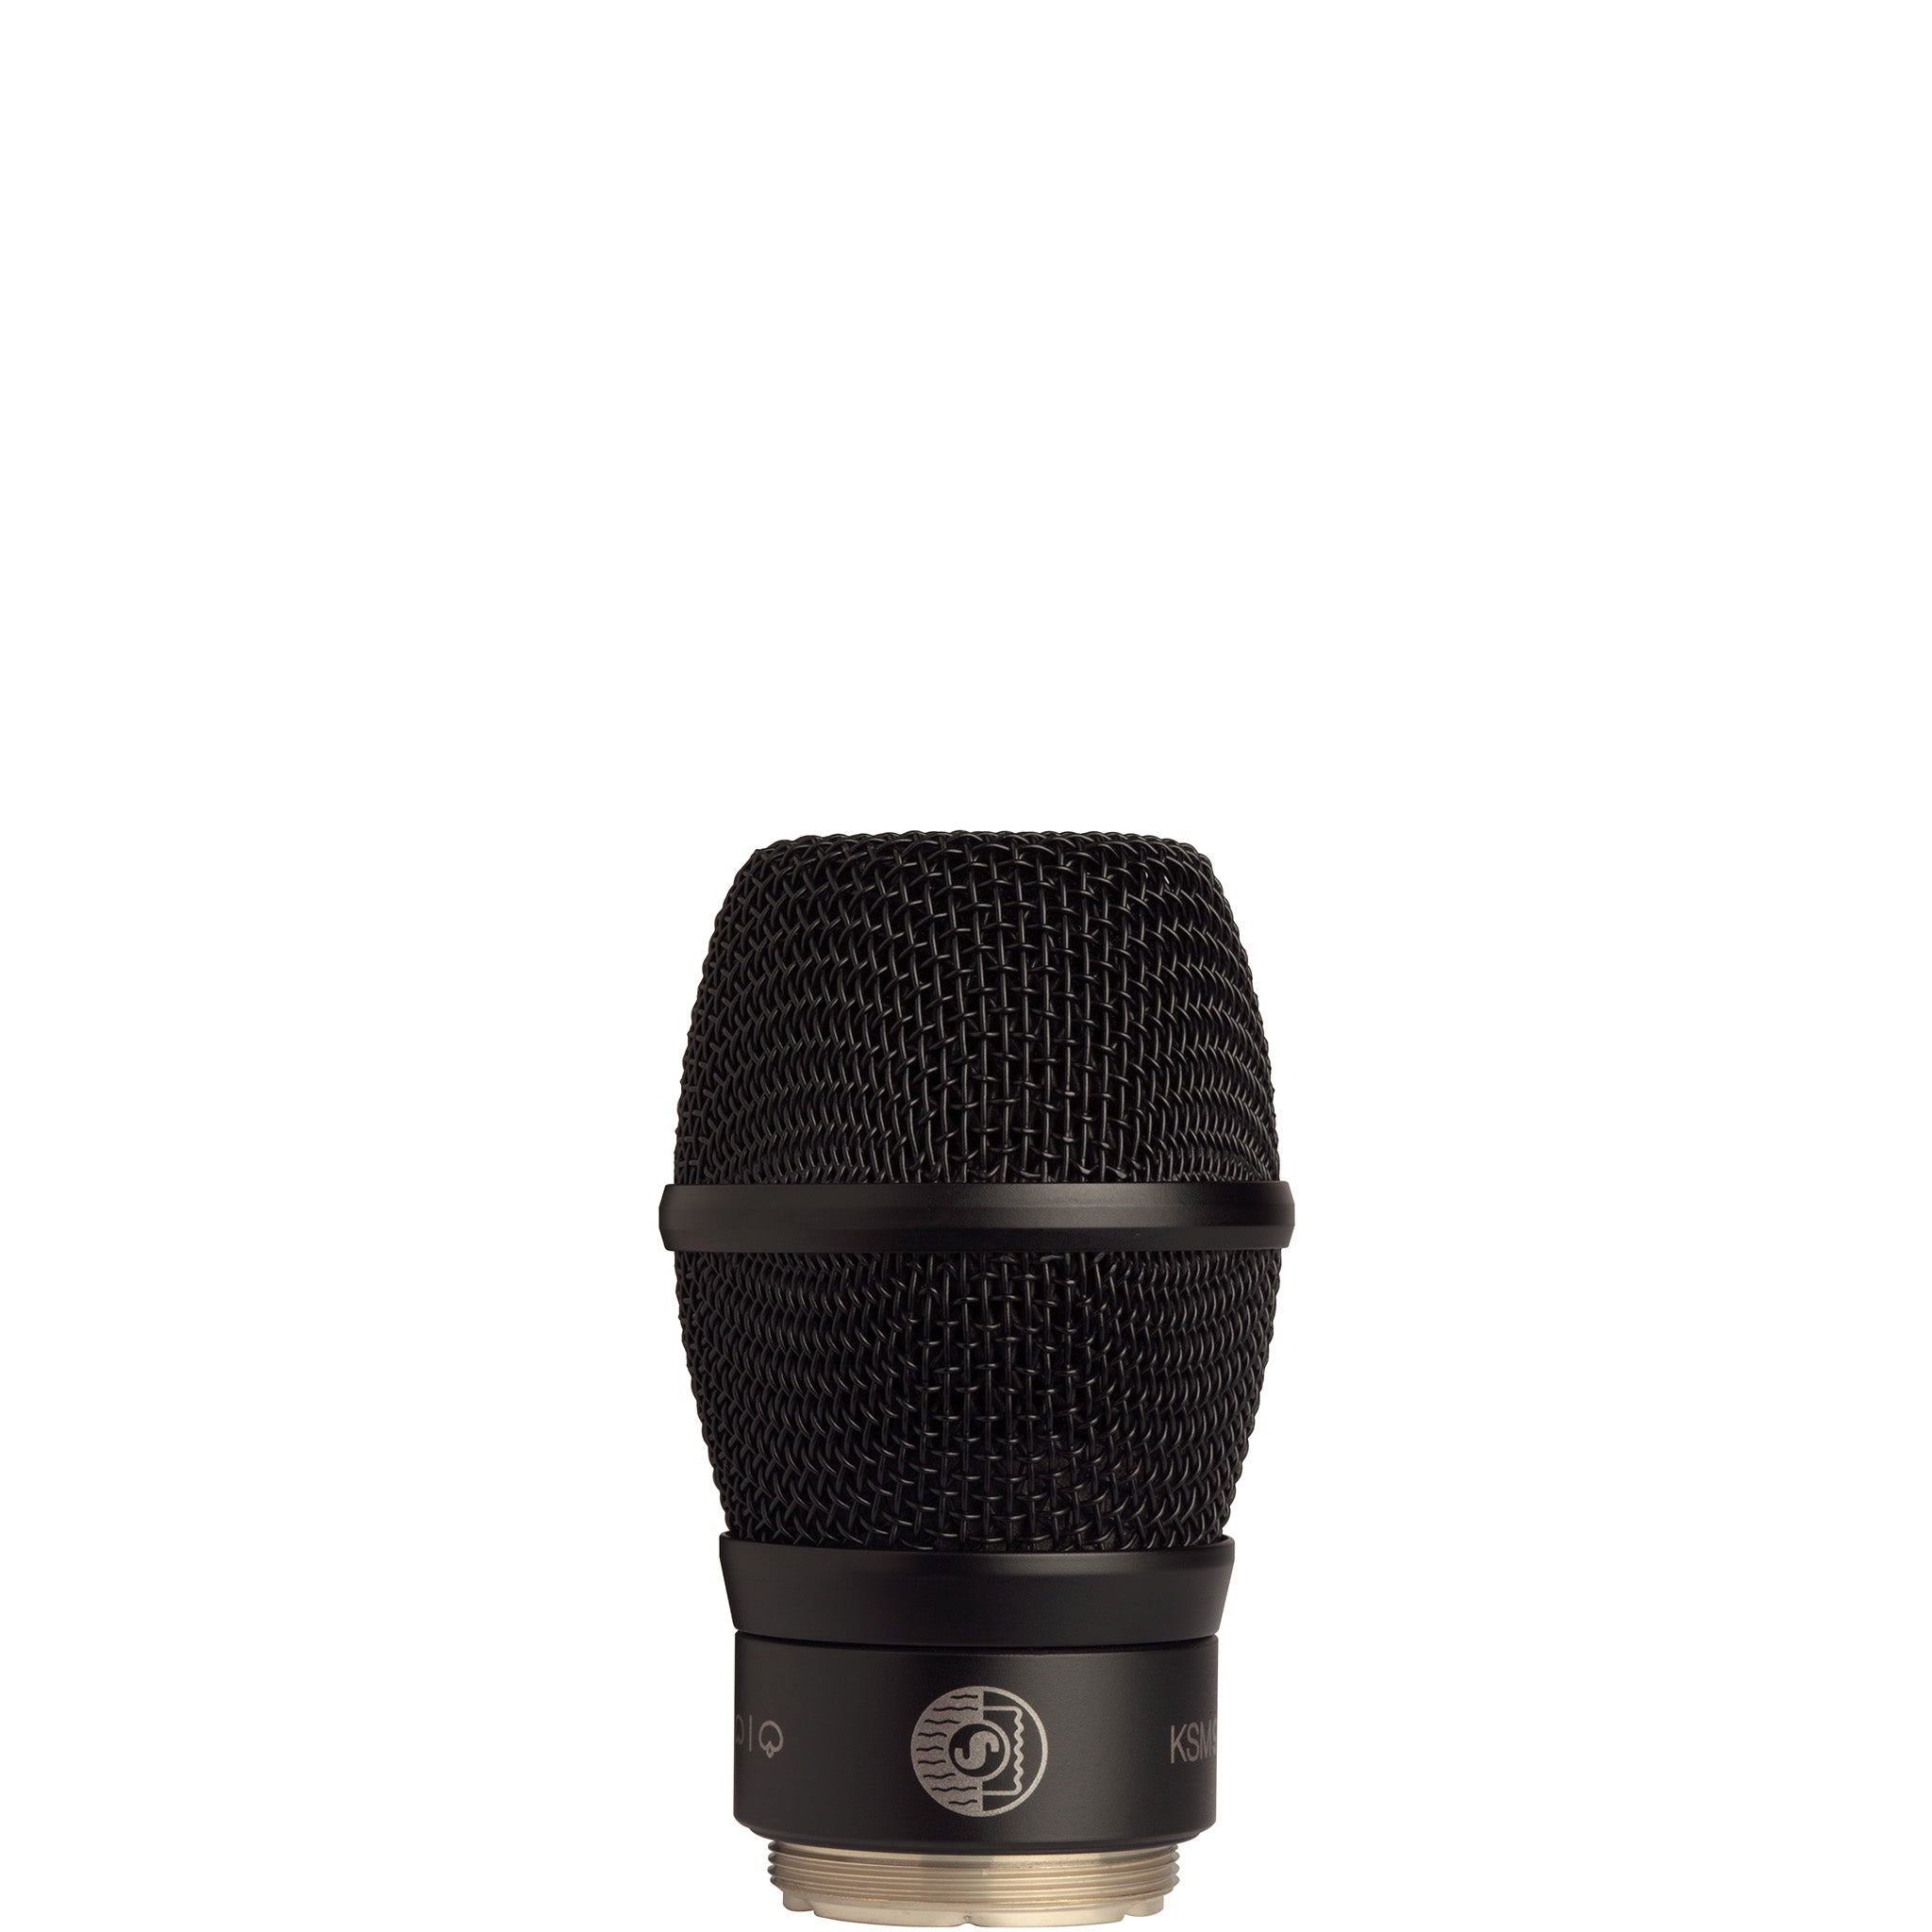 KSM9 - Condenser Vocal Microphone - Shure USA